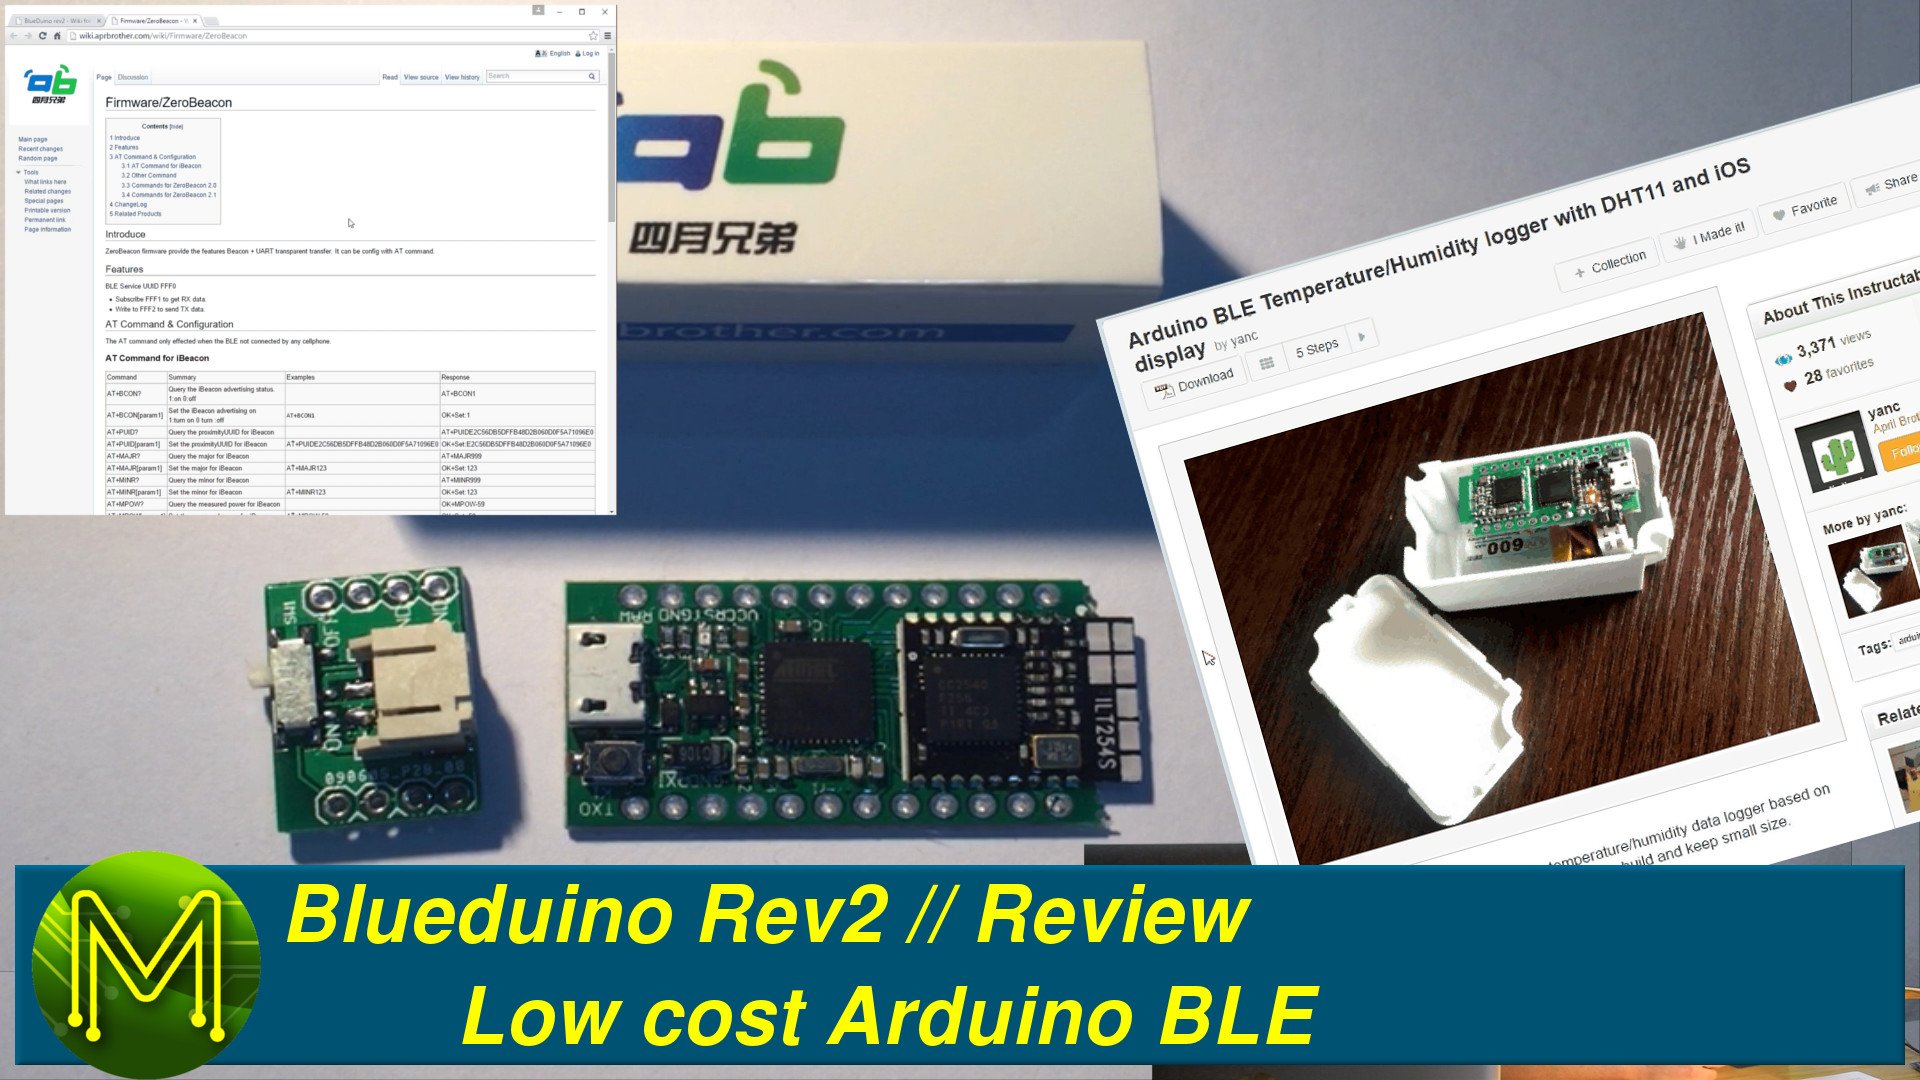 Blueduino Rev2: Low cost Arduino BLE // Review